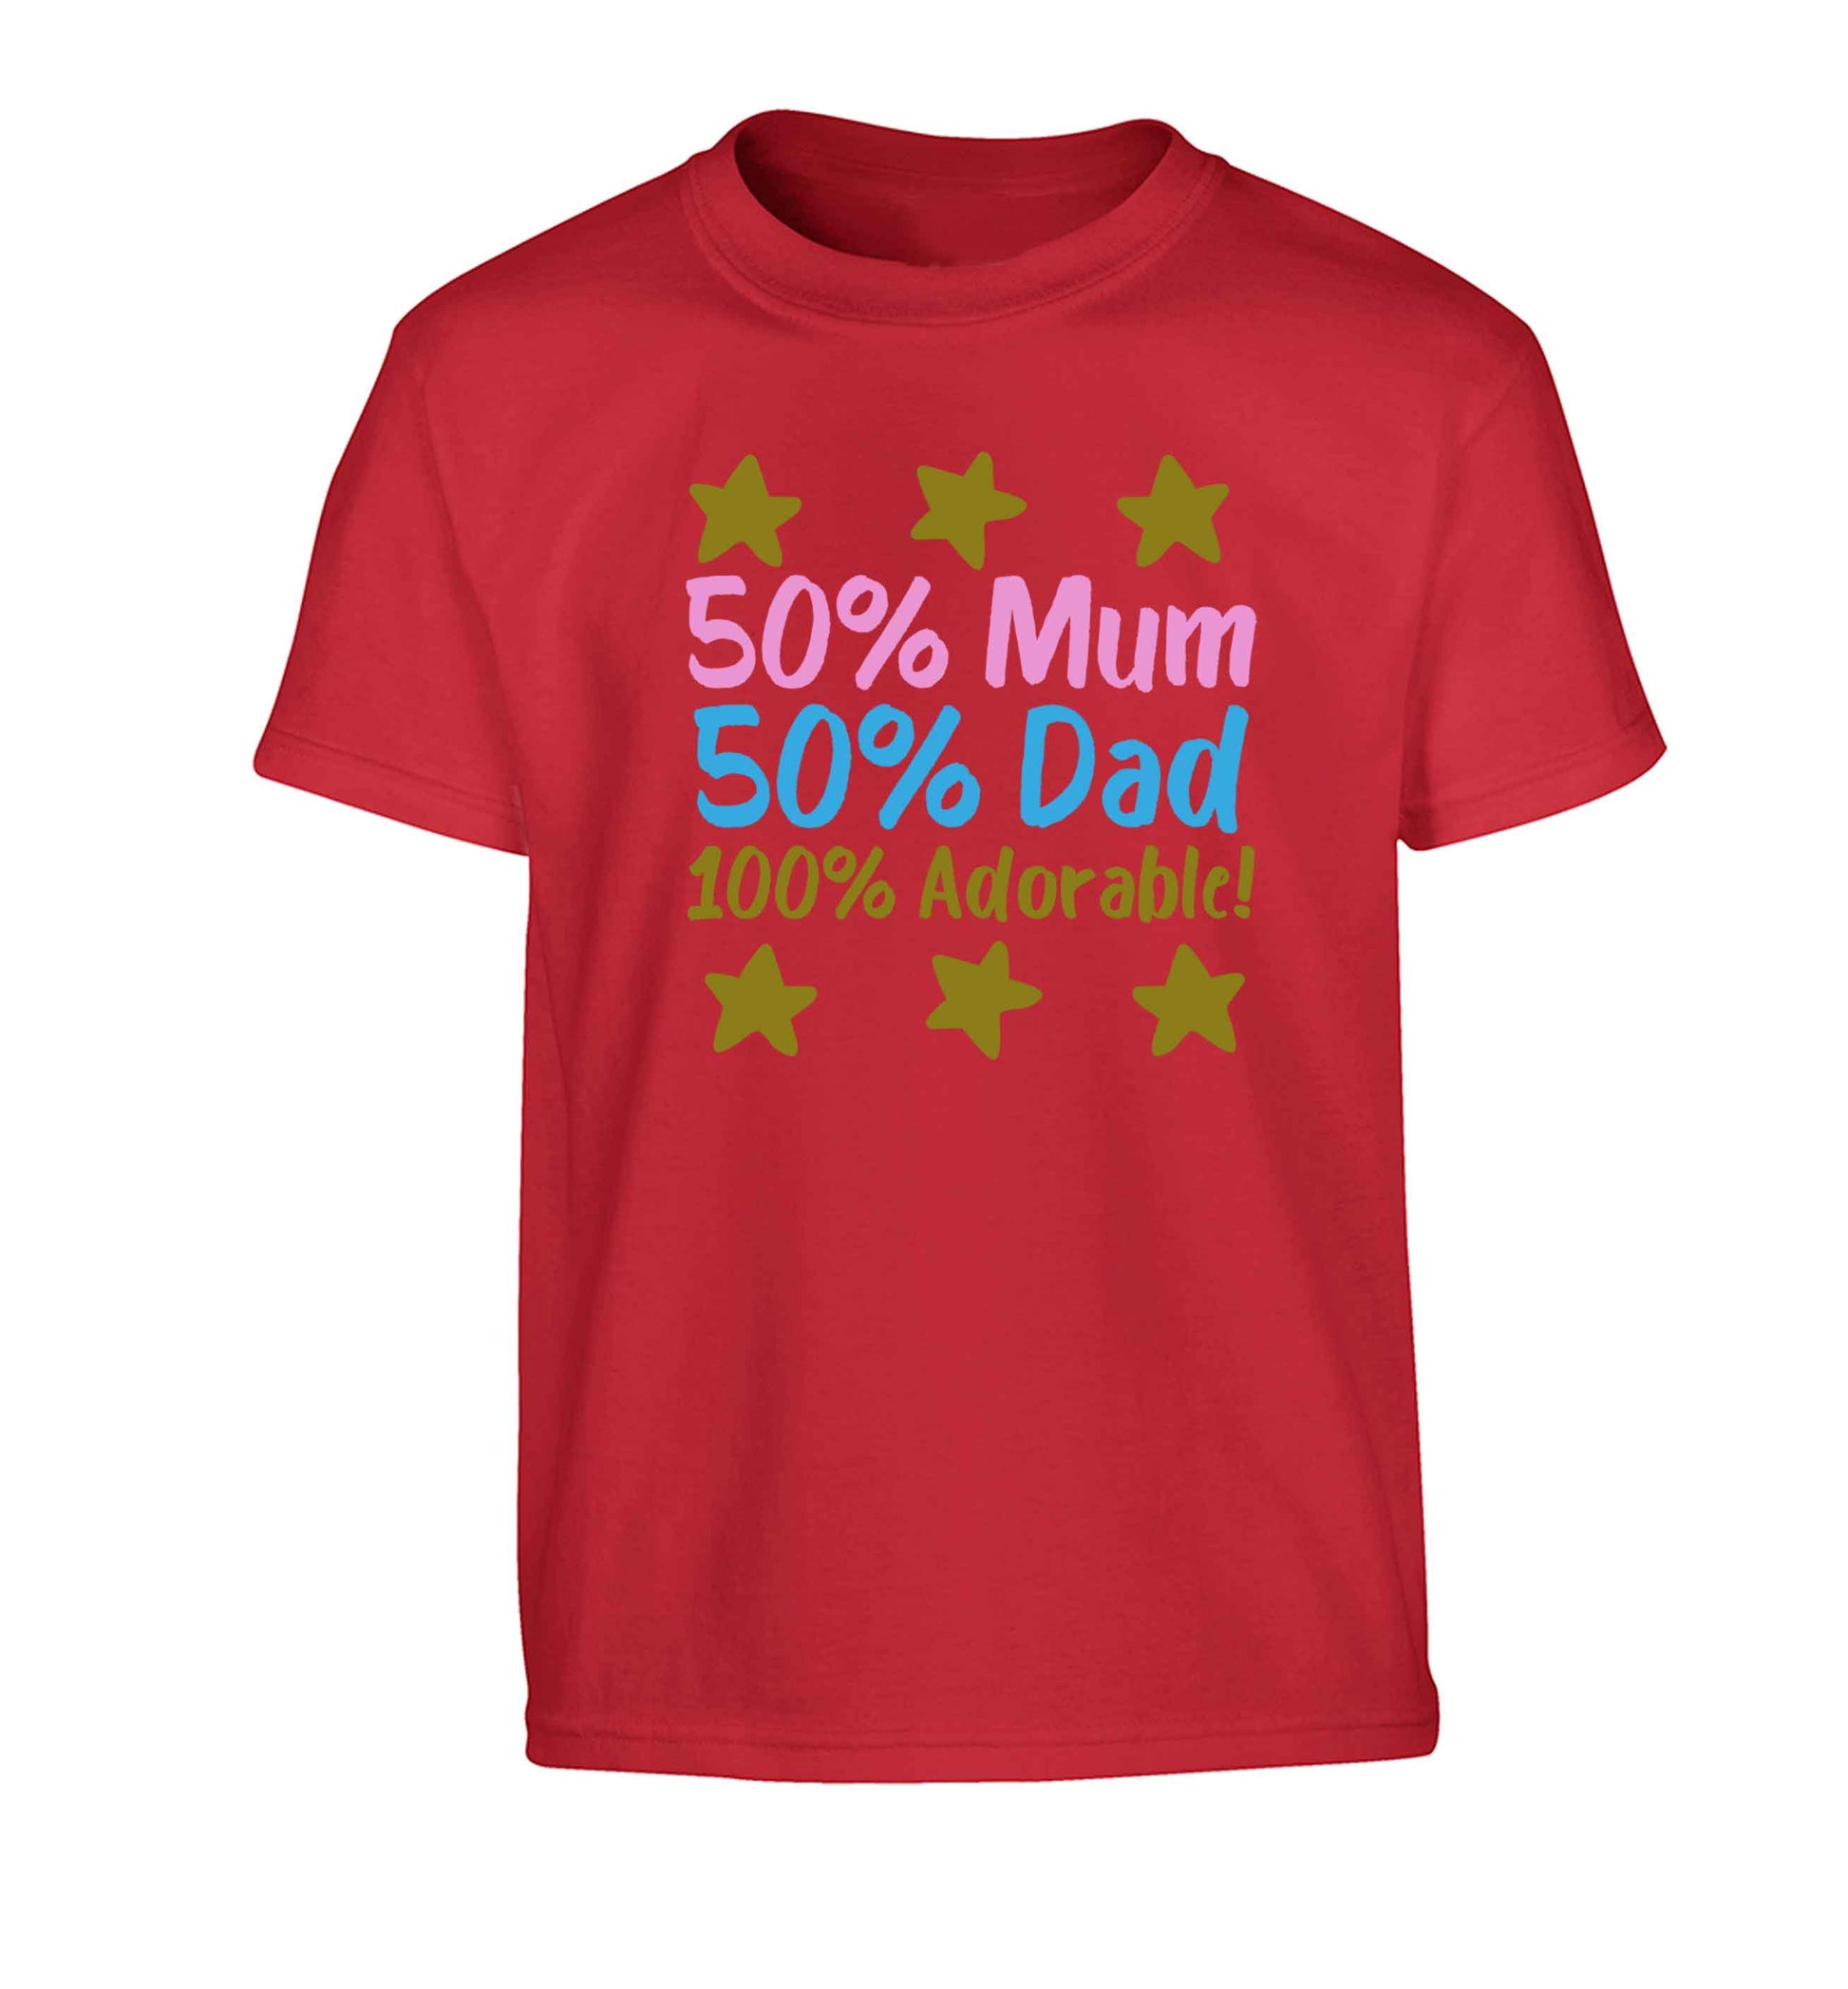 50% mum 50% dad 100% adorable Children's red Tshirt 12-13 Years